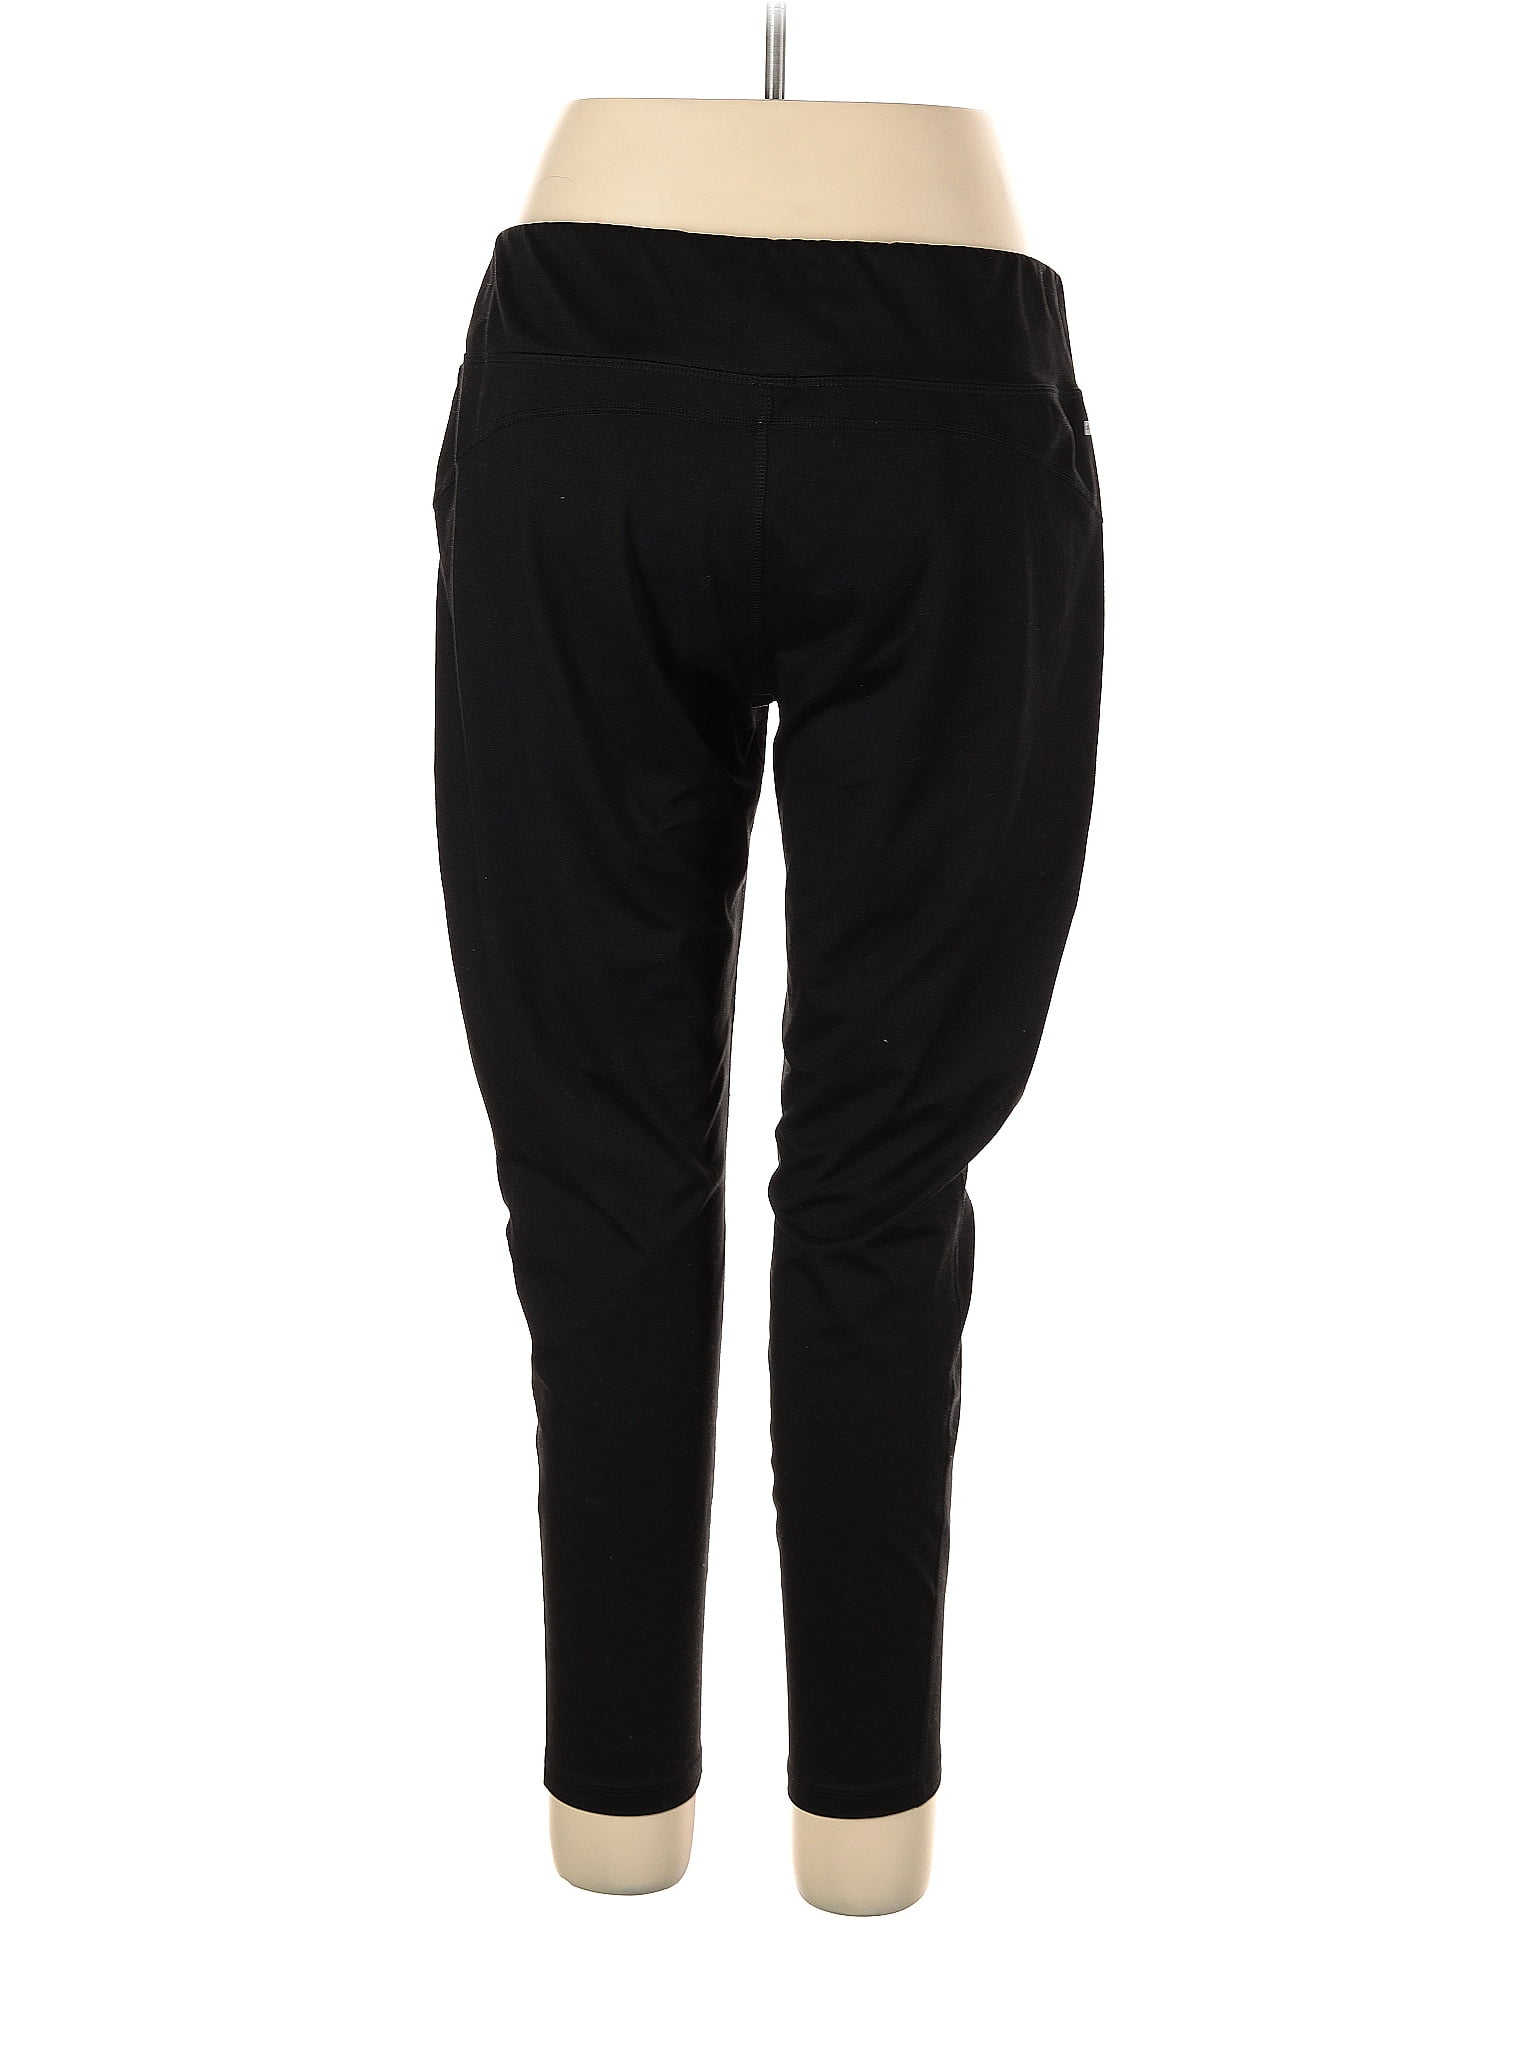 Danskin Now Black Casual Pants Size 20 (Plus) - 32% off